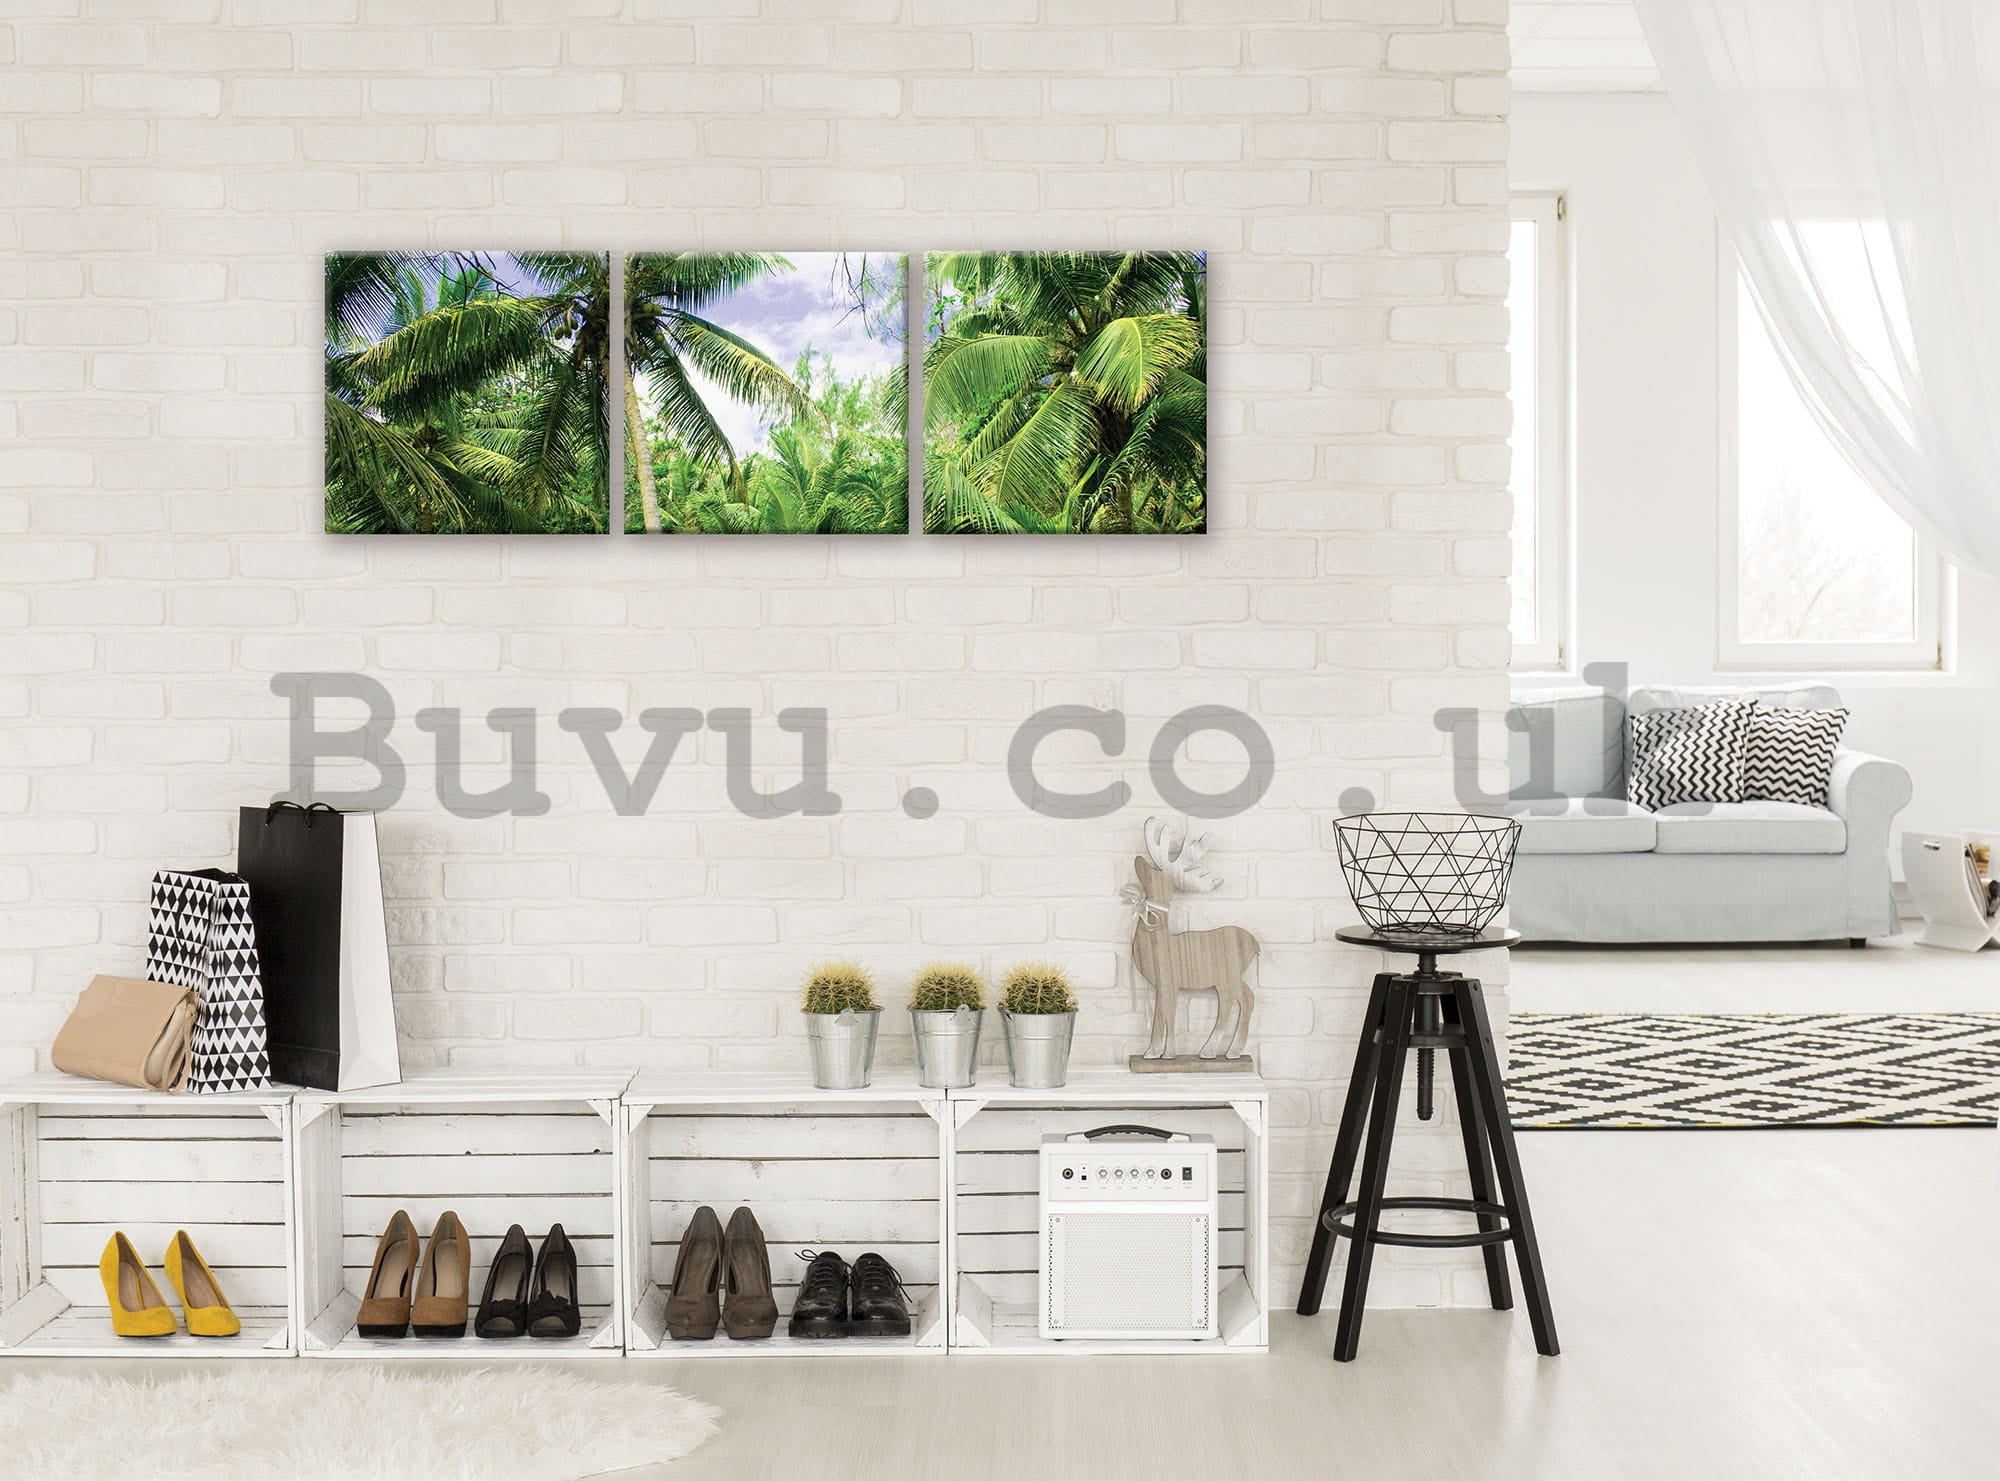 Painting on canvas: Palm trees - set 3pcs 25x25cm